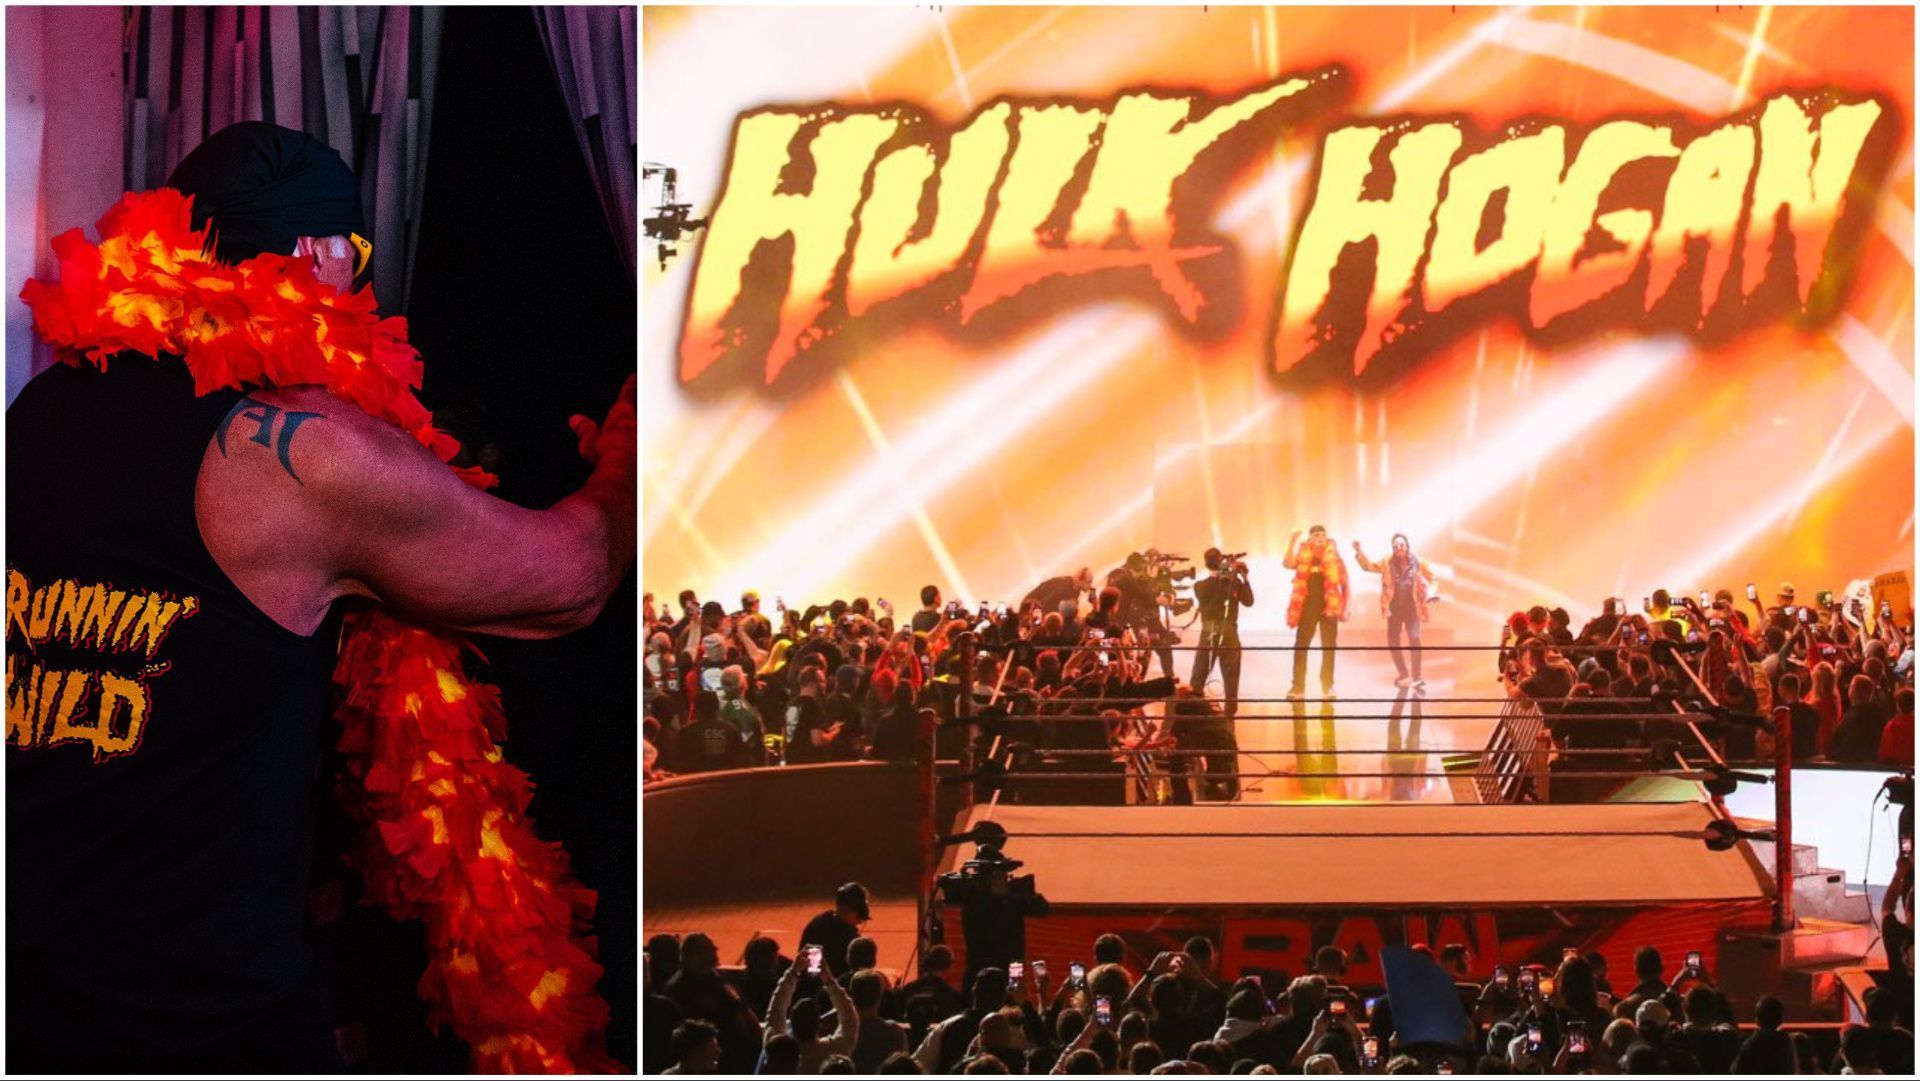 WWE Hall of Famer Hulk Hogan at the RAW XXX special